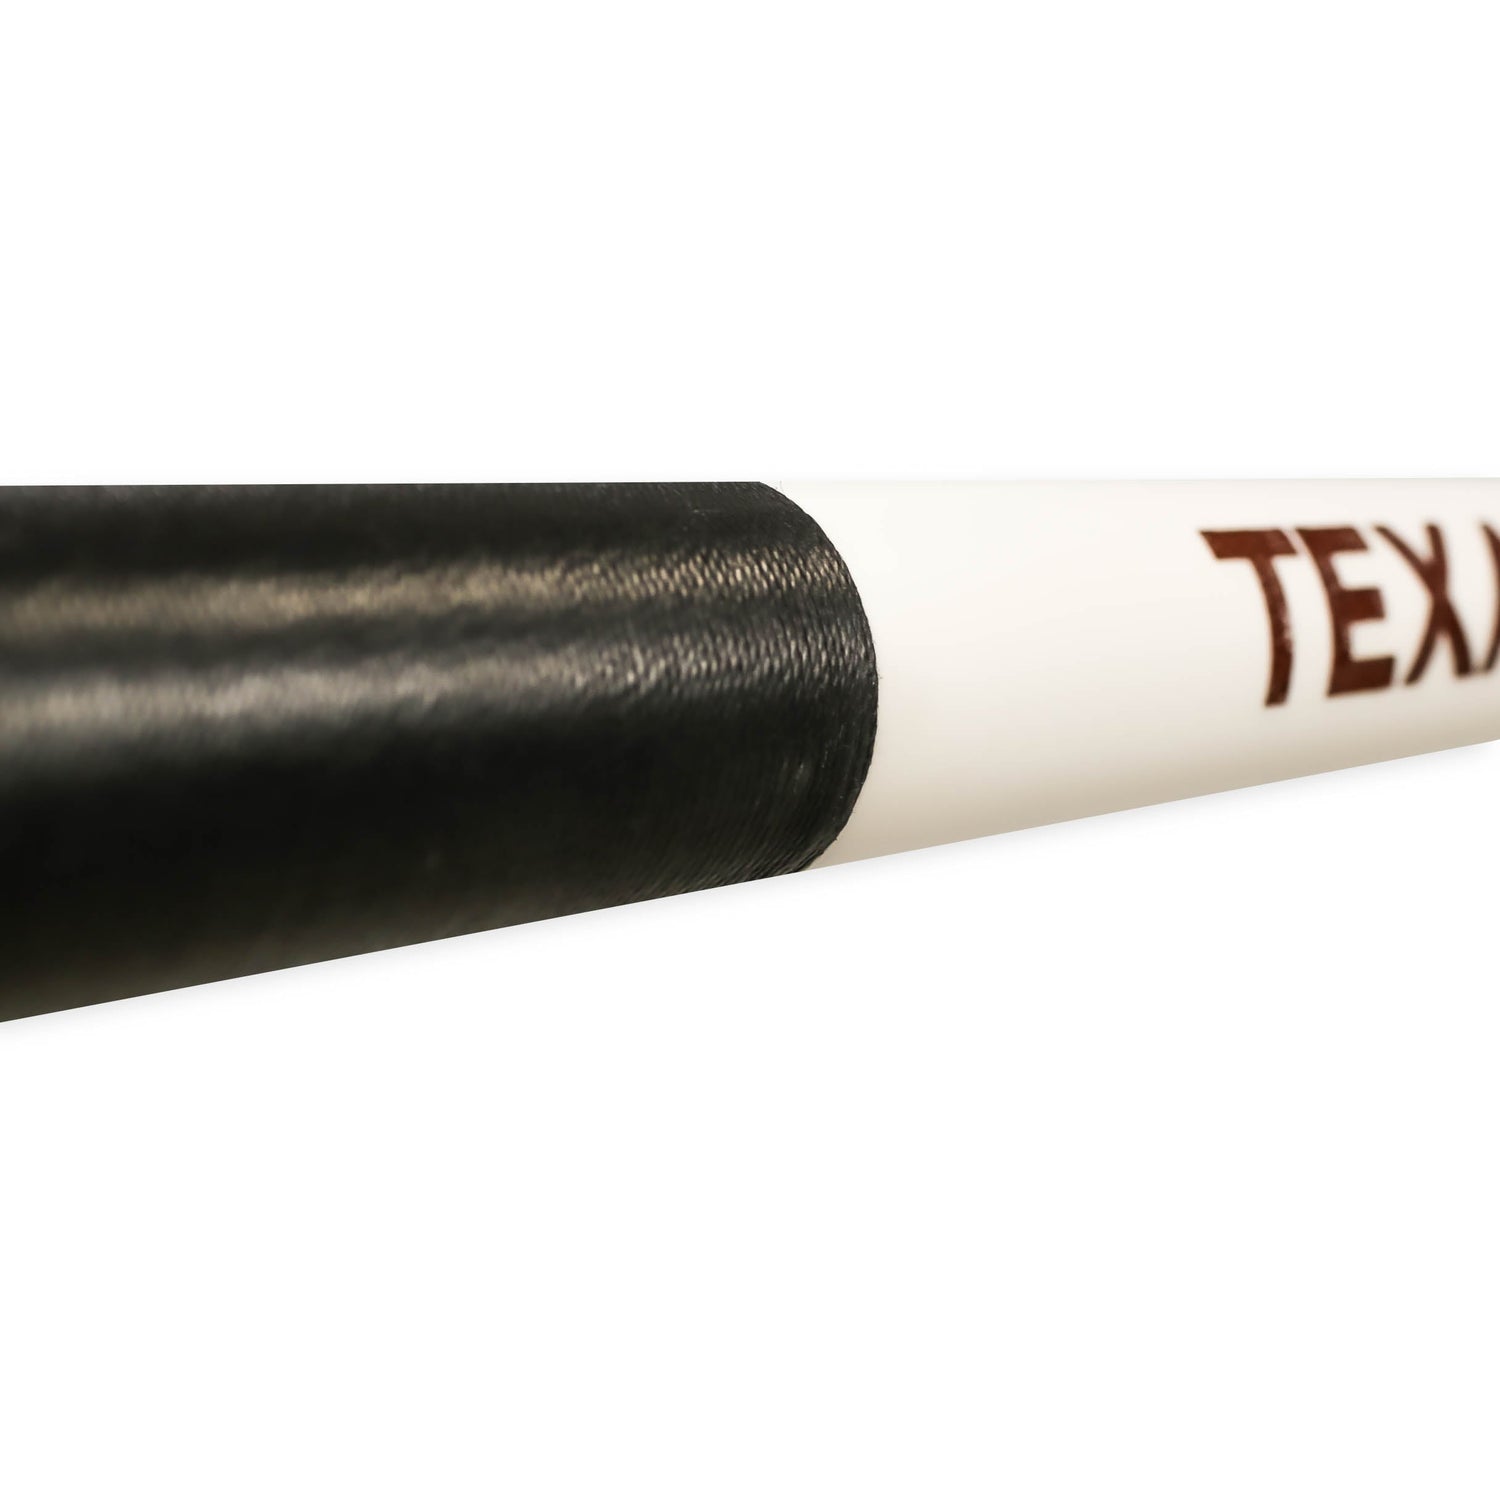 Texas A&M Engraved Billiard Cue Stick